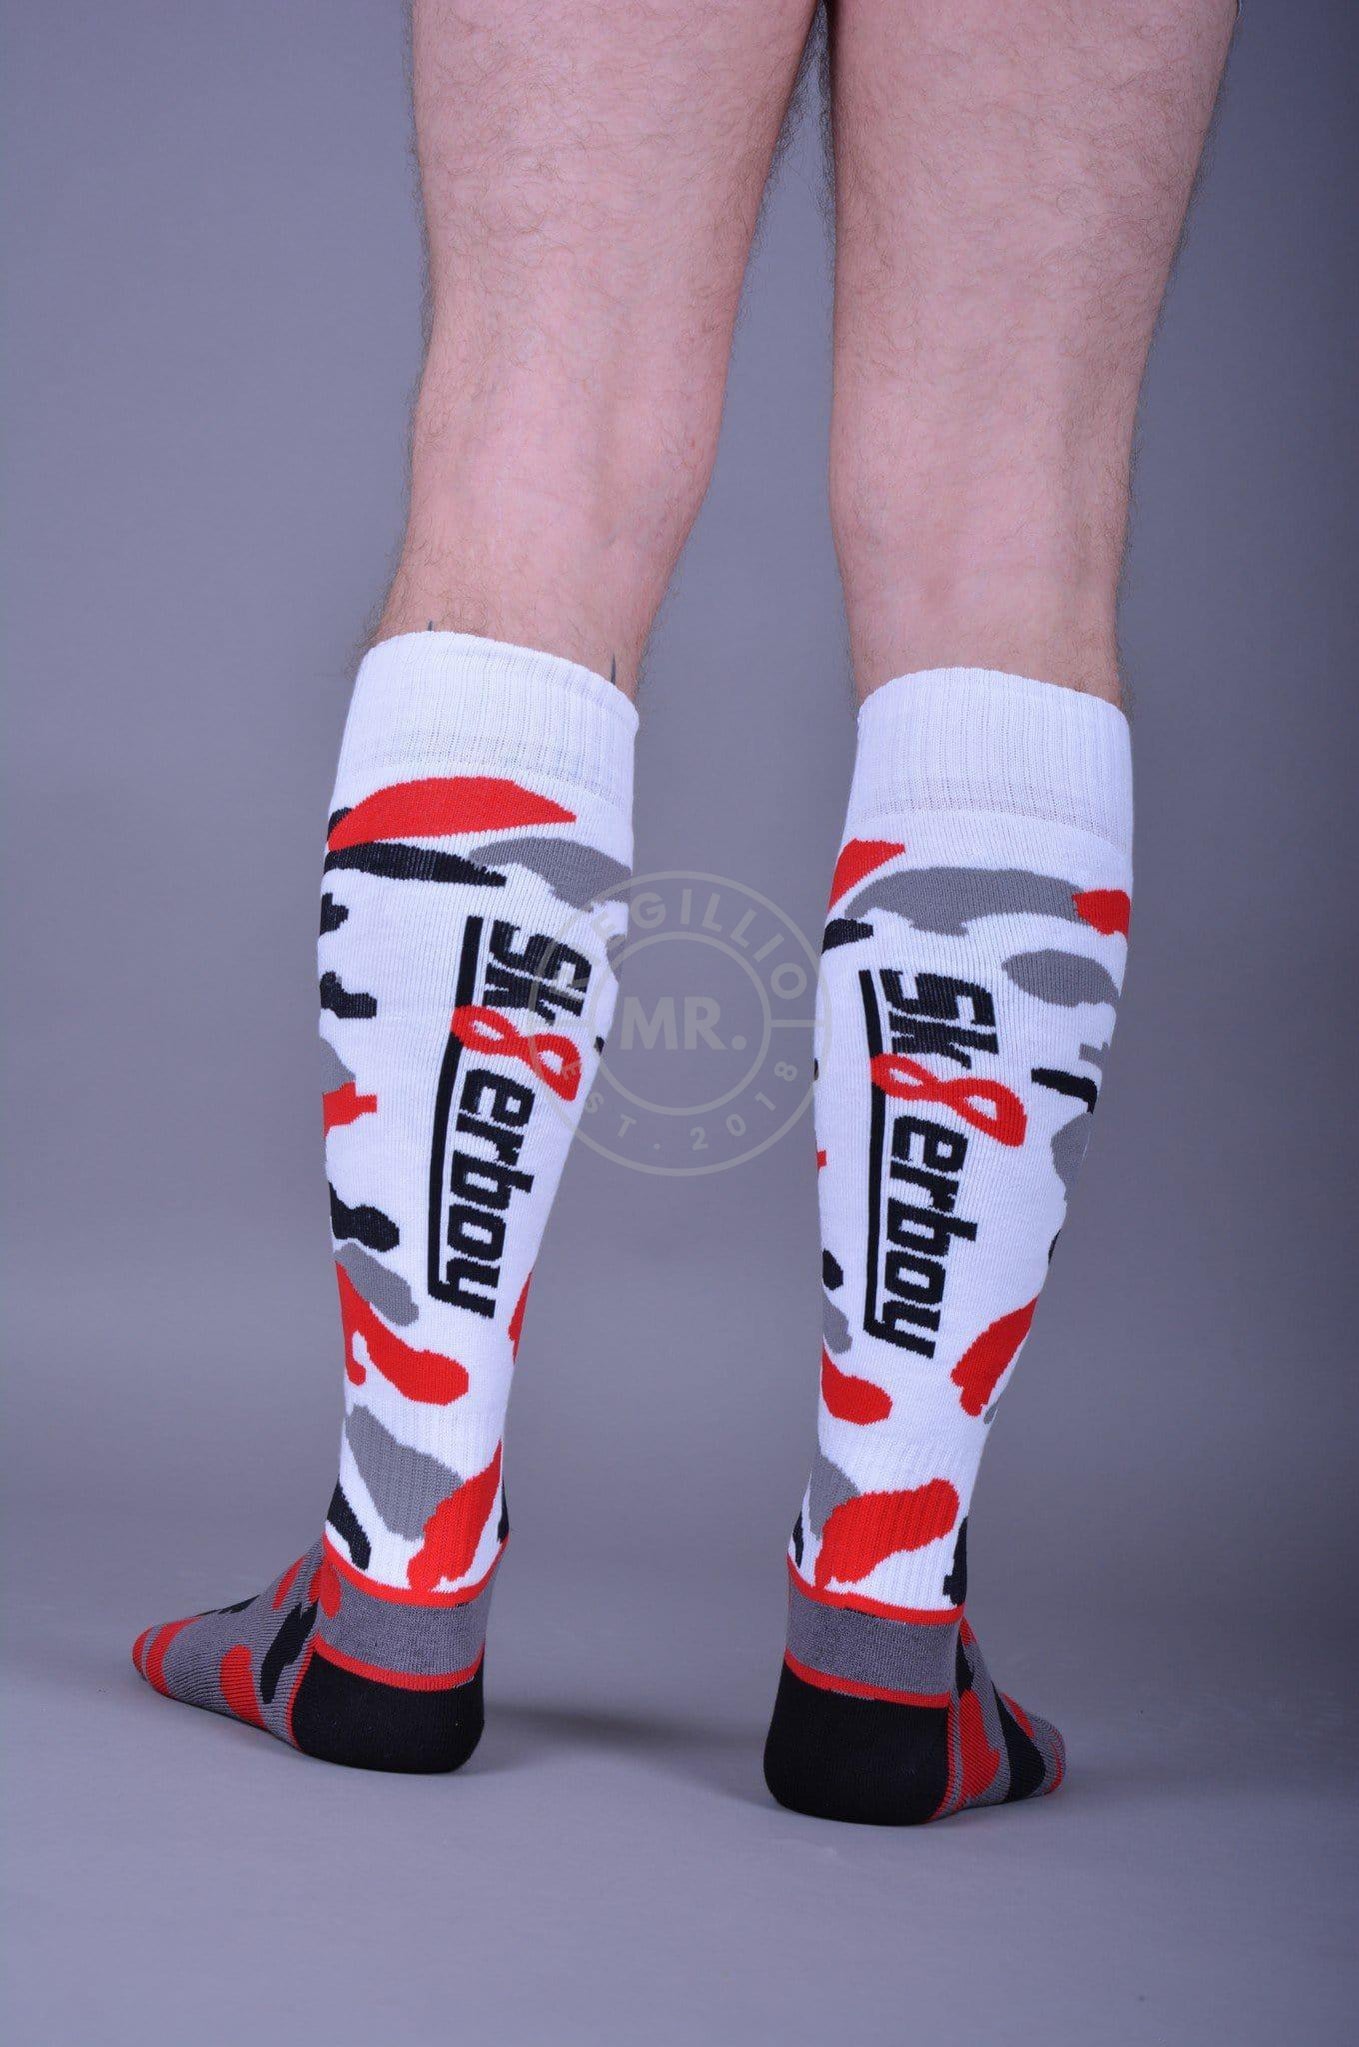 Sk8erboy MX Socks at MR. Riegillio